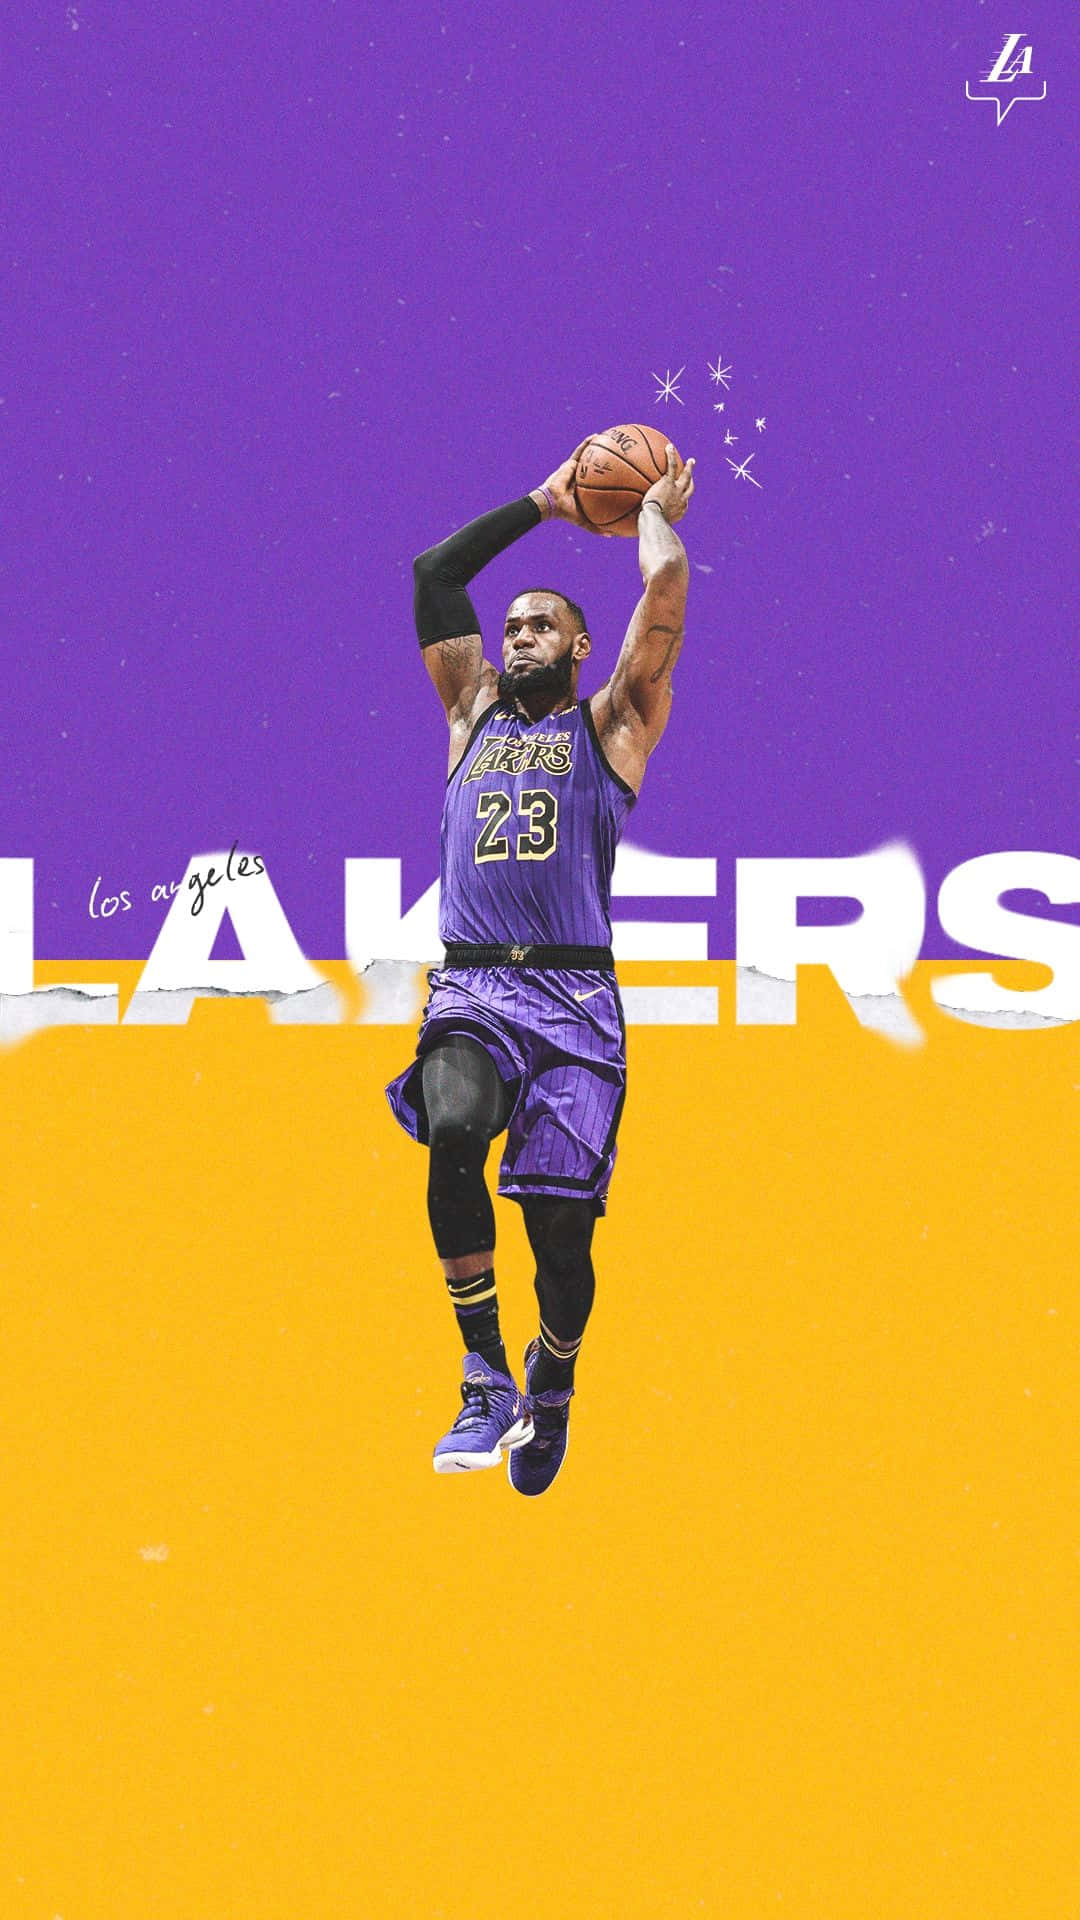 Download Lebron James Lakers 23 Fanart Wallpaper